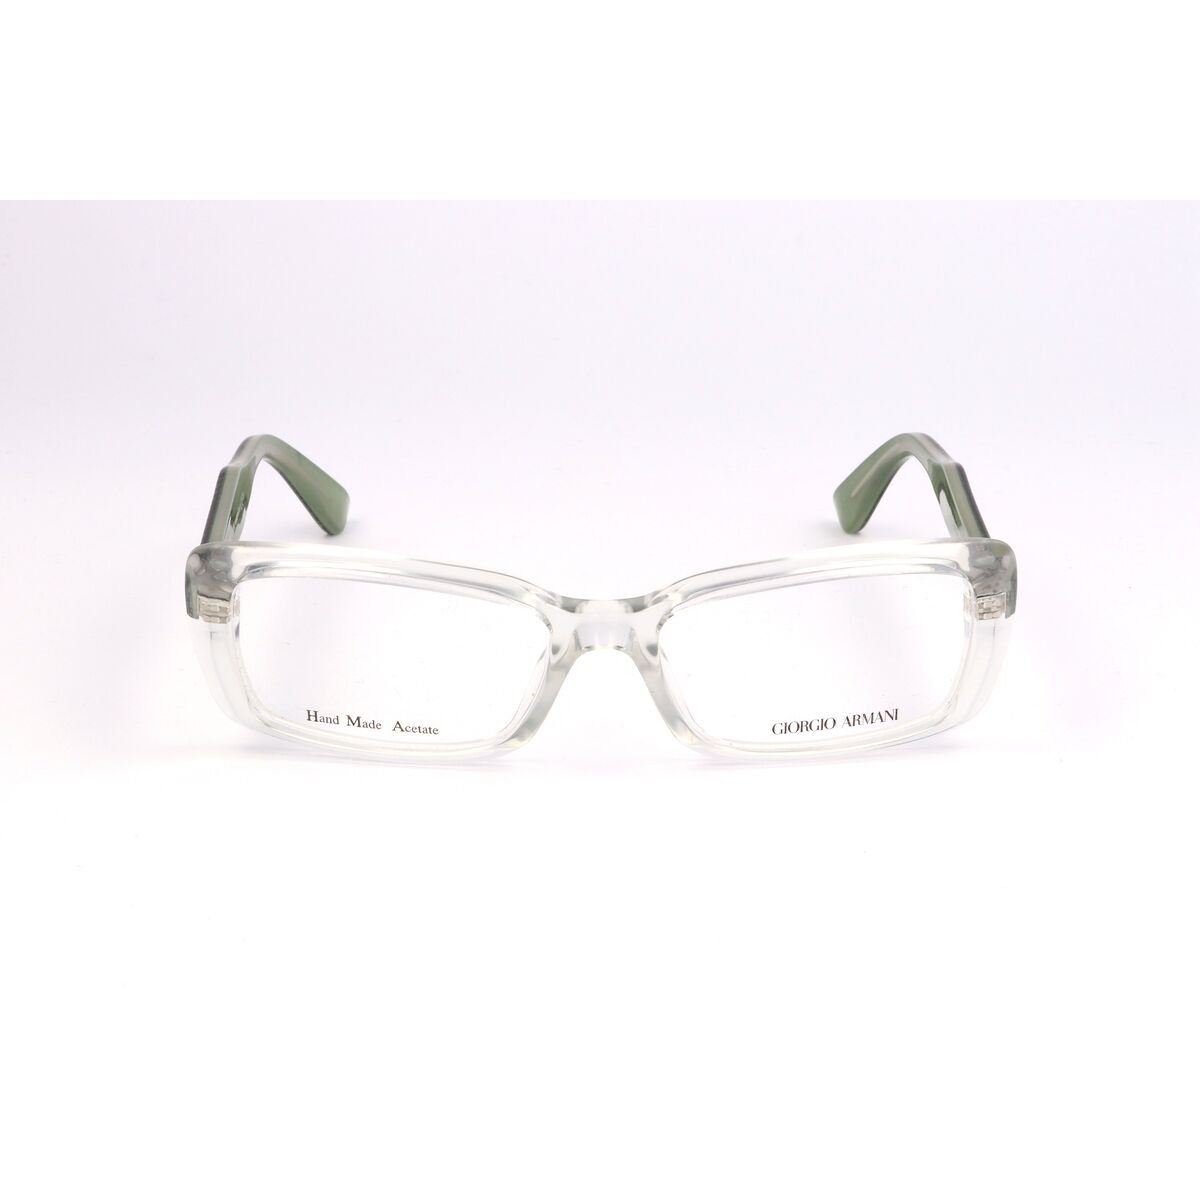 Giorgio Armani Brillengestell Brillenfassung Armani GA-943-LU9 Durchsichtig Brillengestell Brillenge